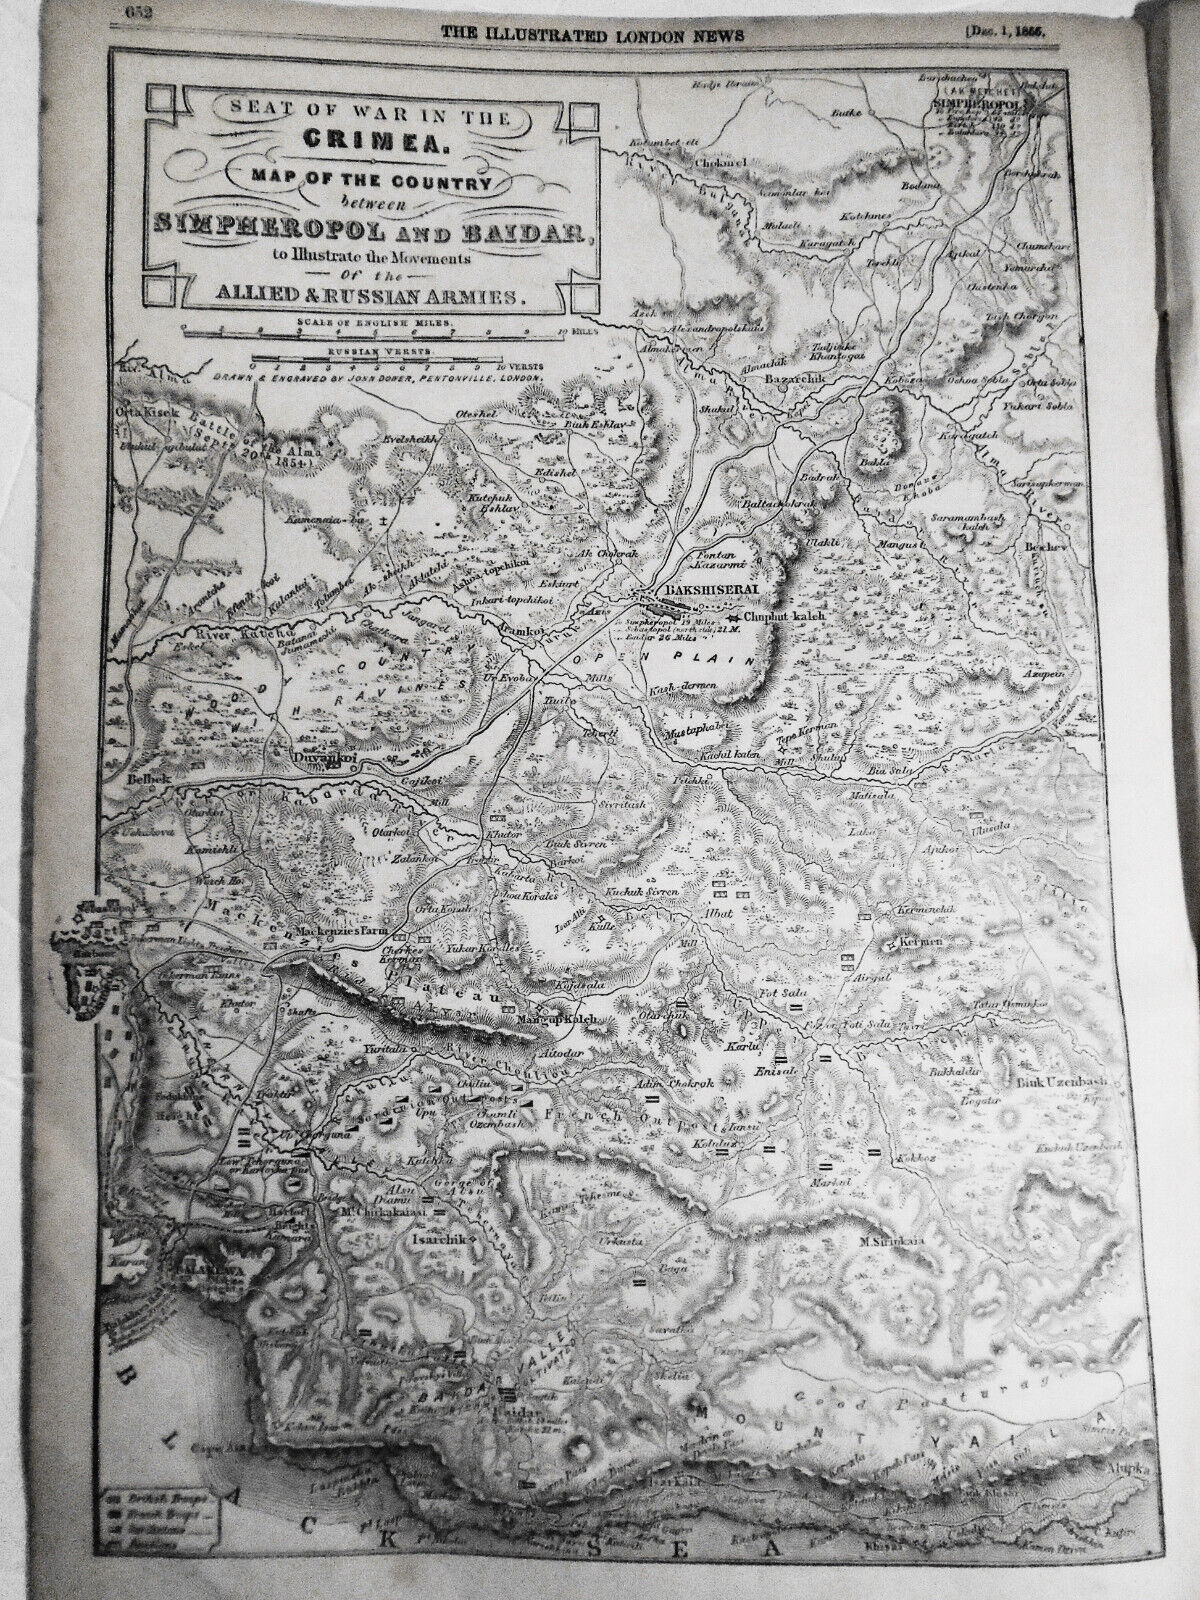 Illustrated London News December 1, 1855 original. Crimea War Map; Sardinia, etc